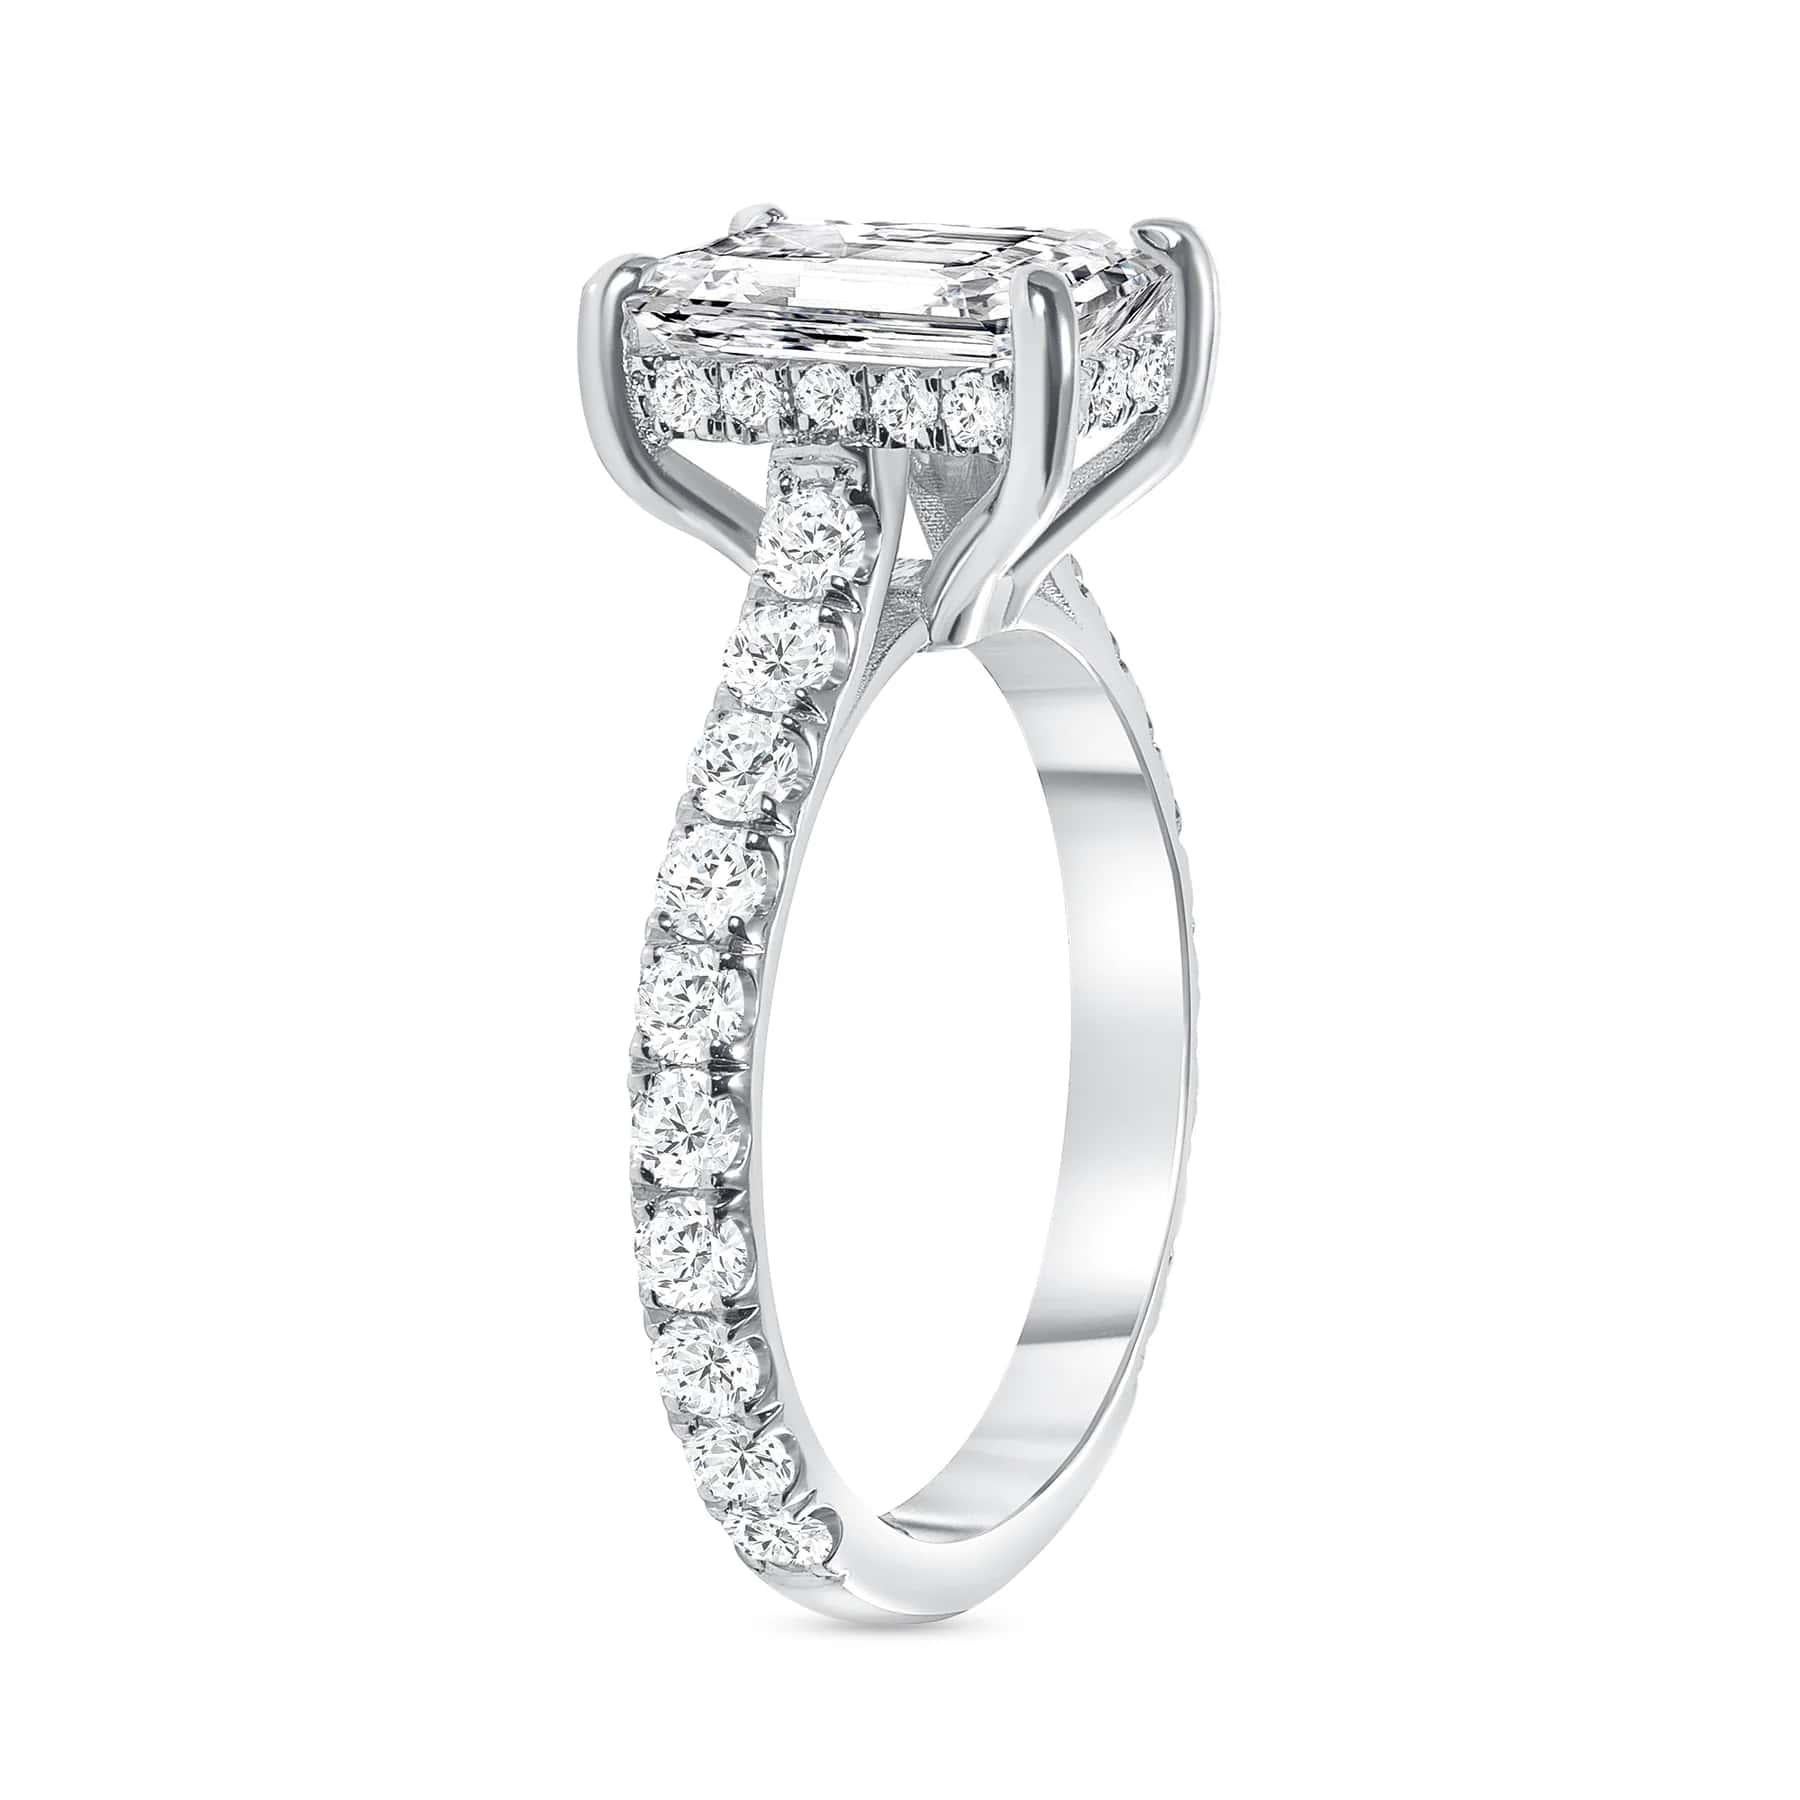 For Sale:  Averie's Engagement Ring Hidden Halo Setting 2